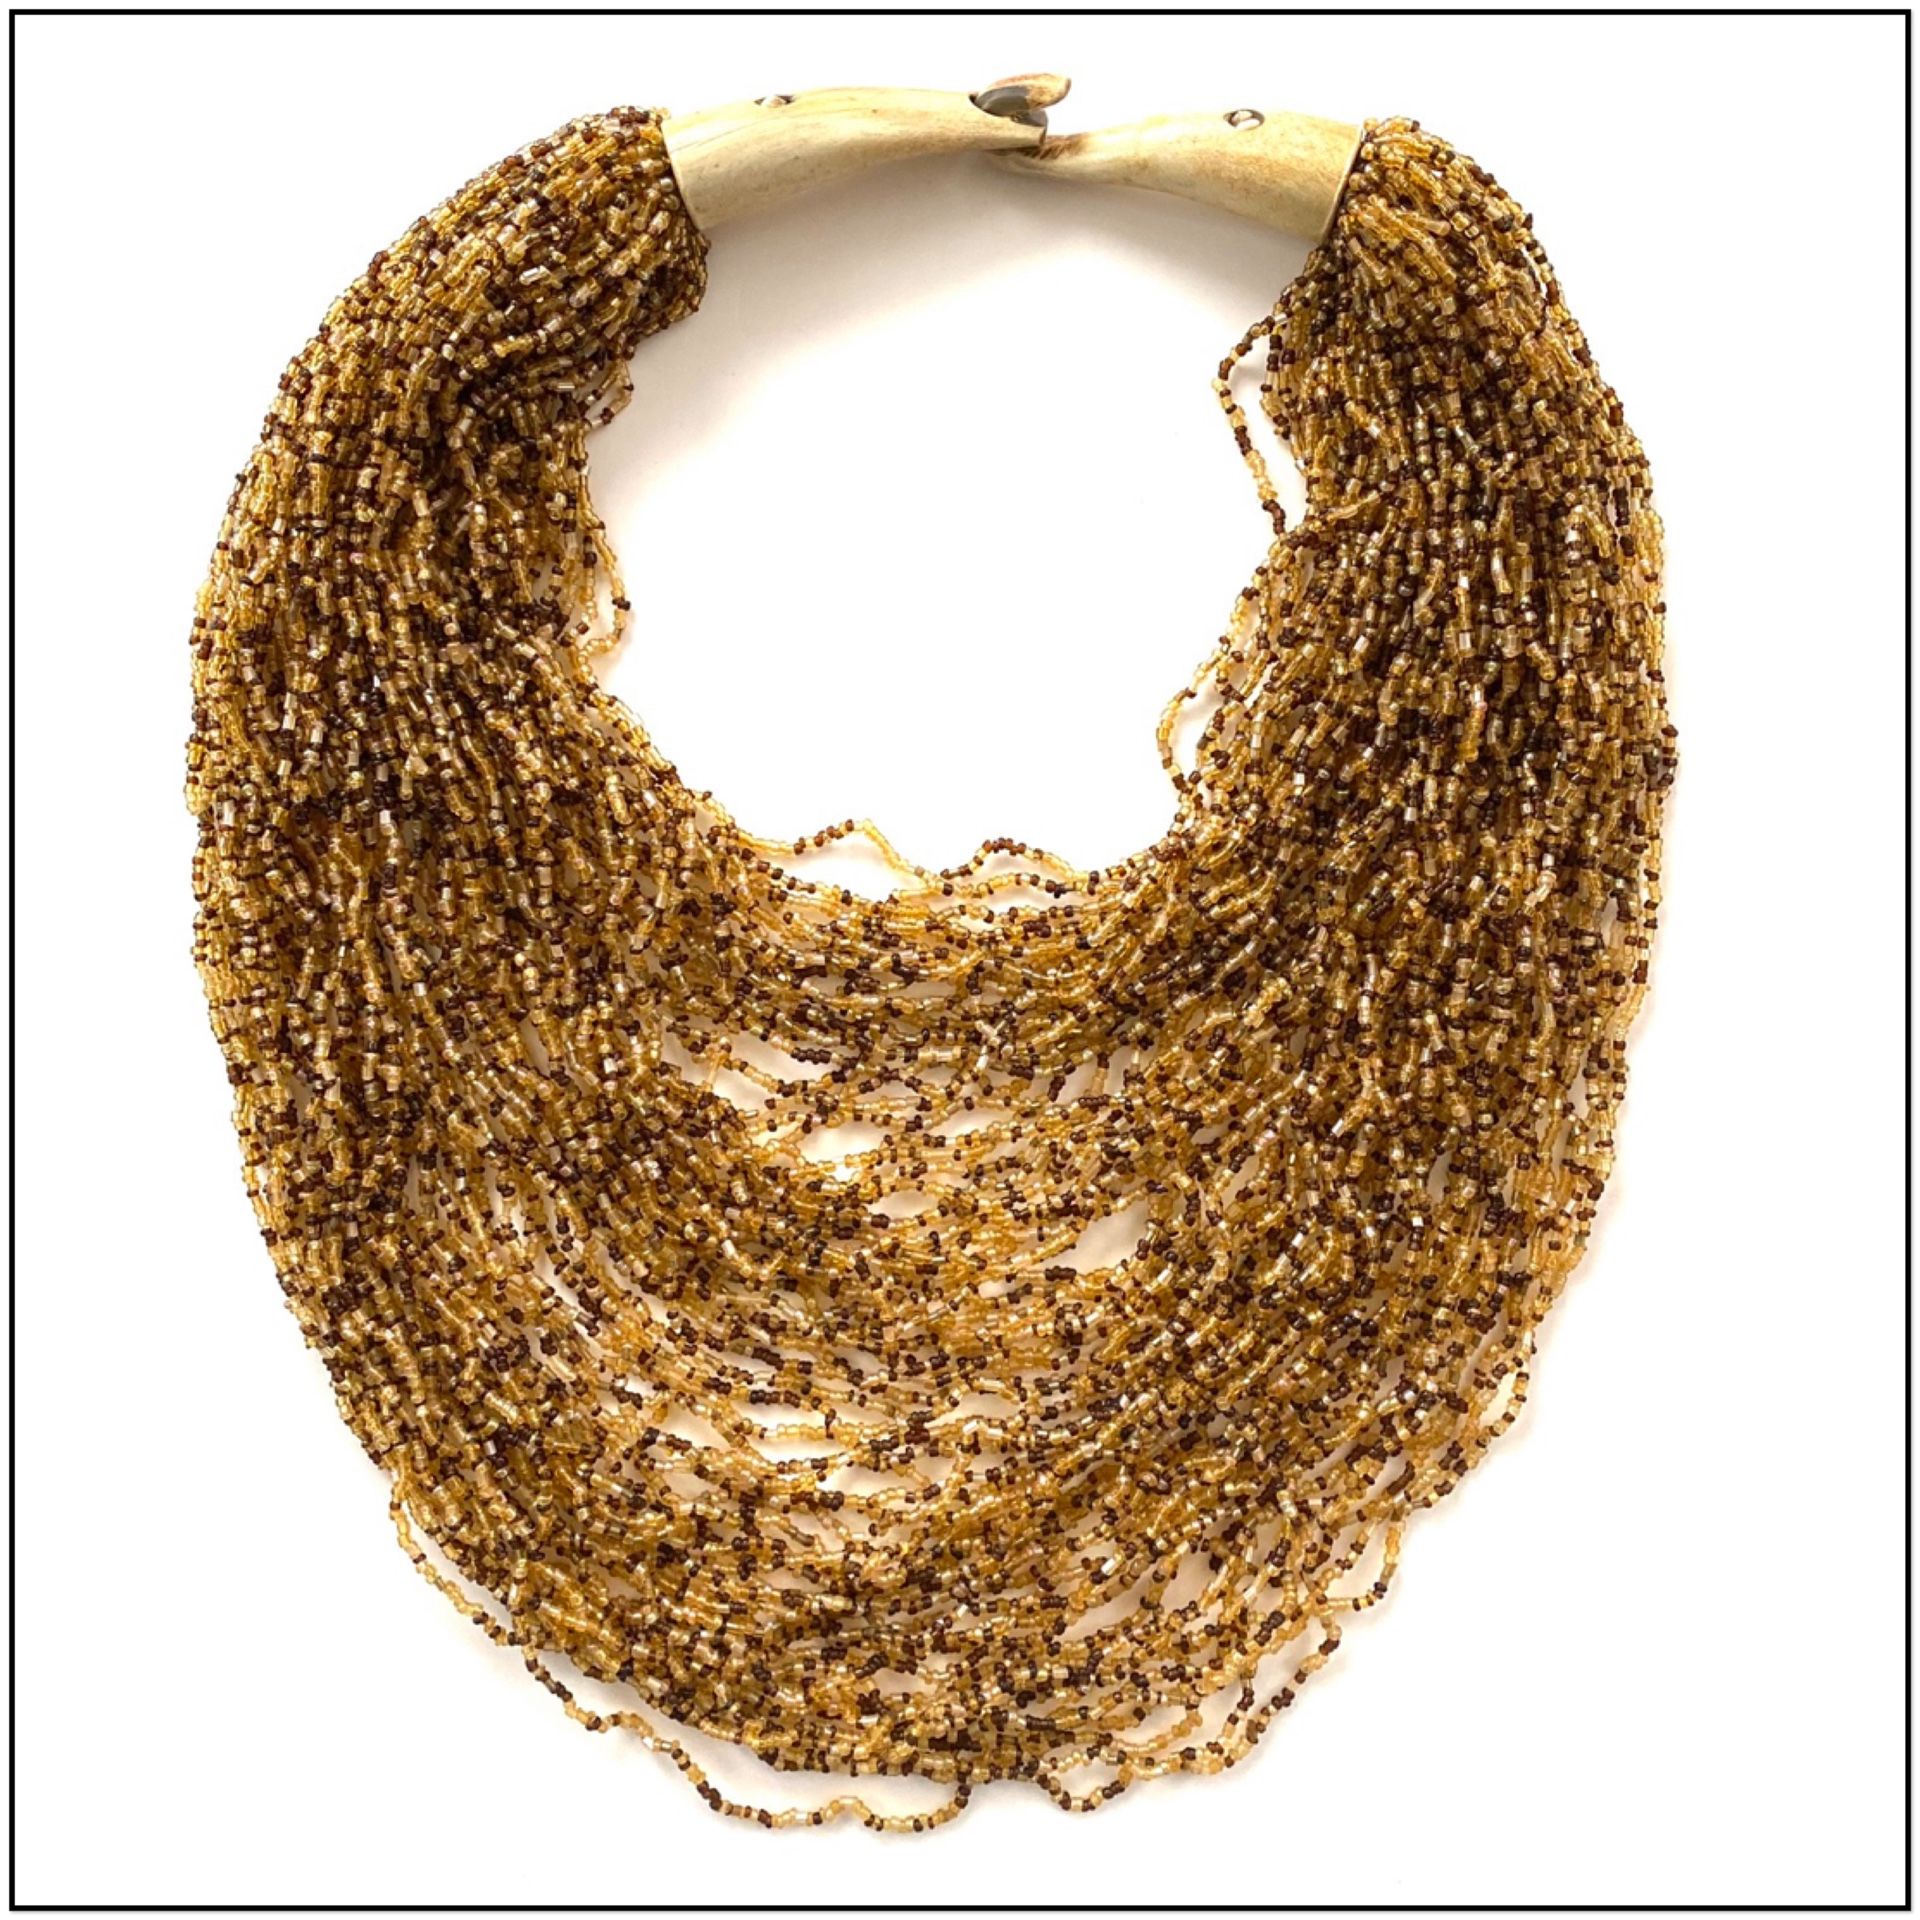 Vintage multi-strand beads necklace